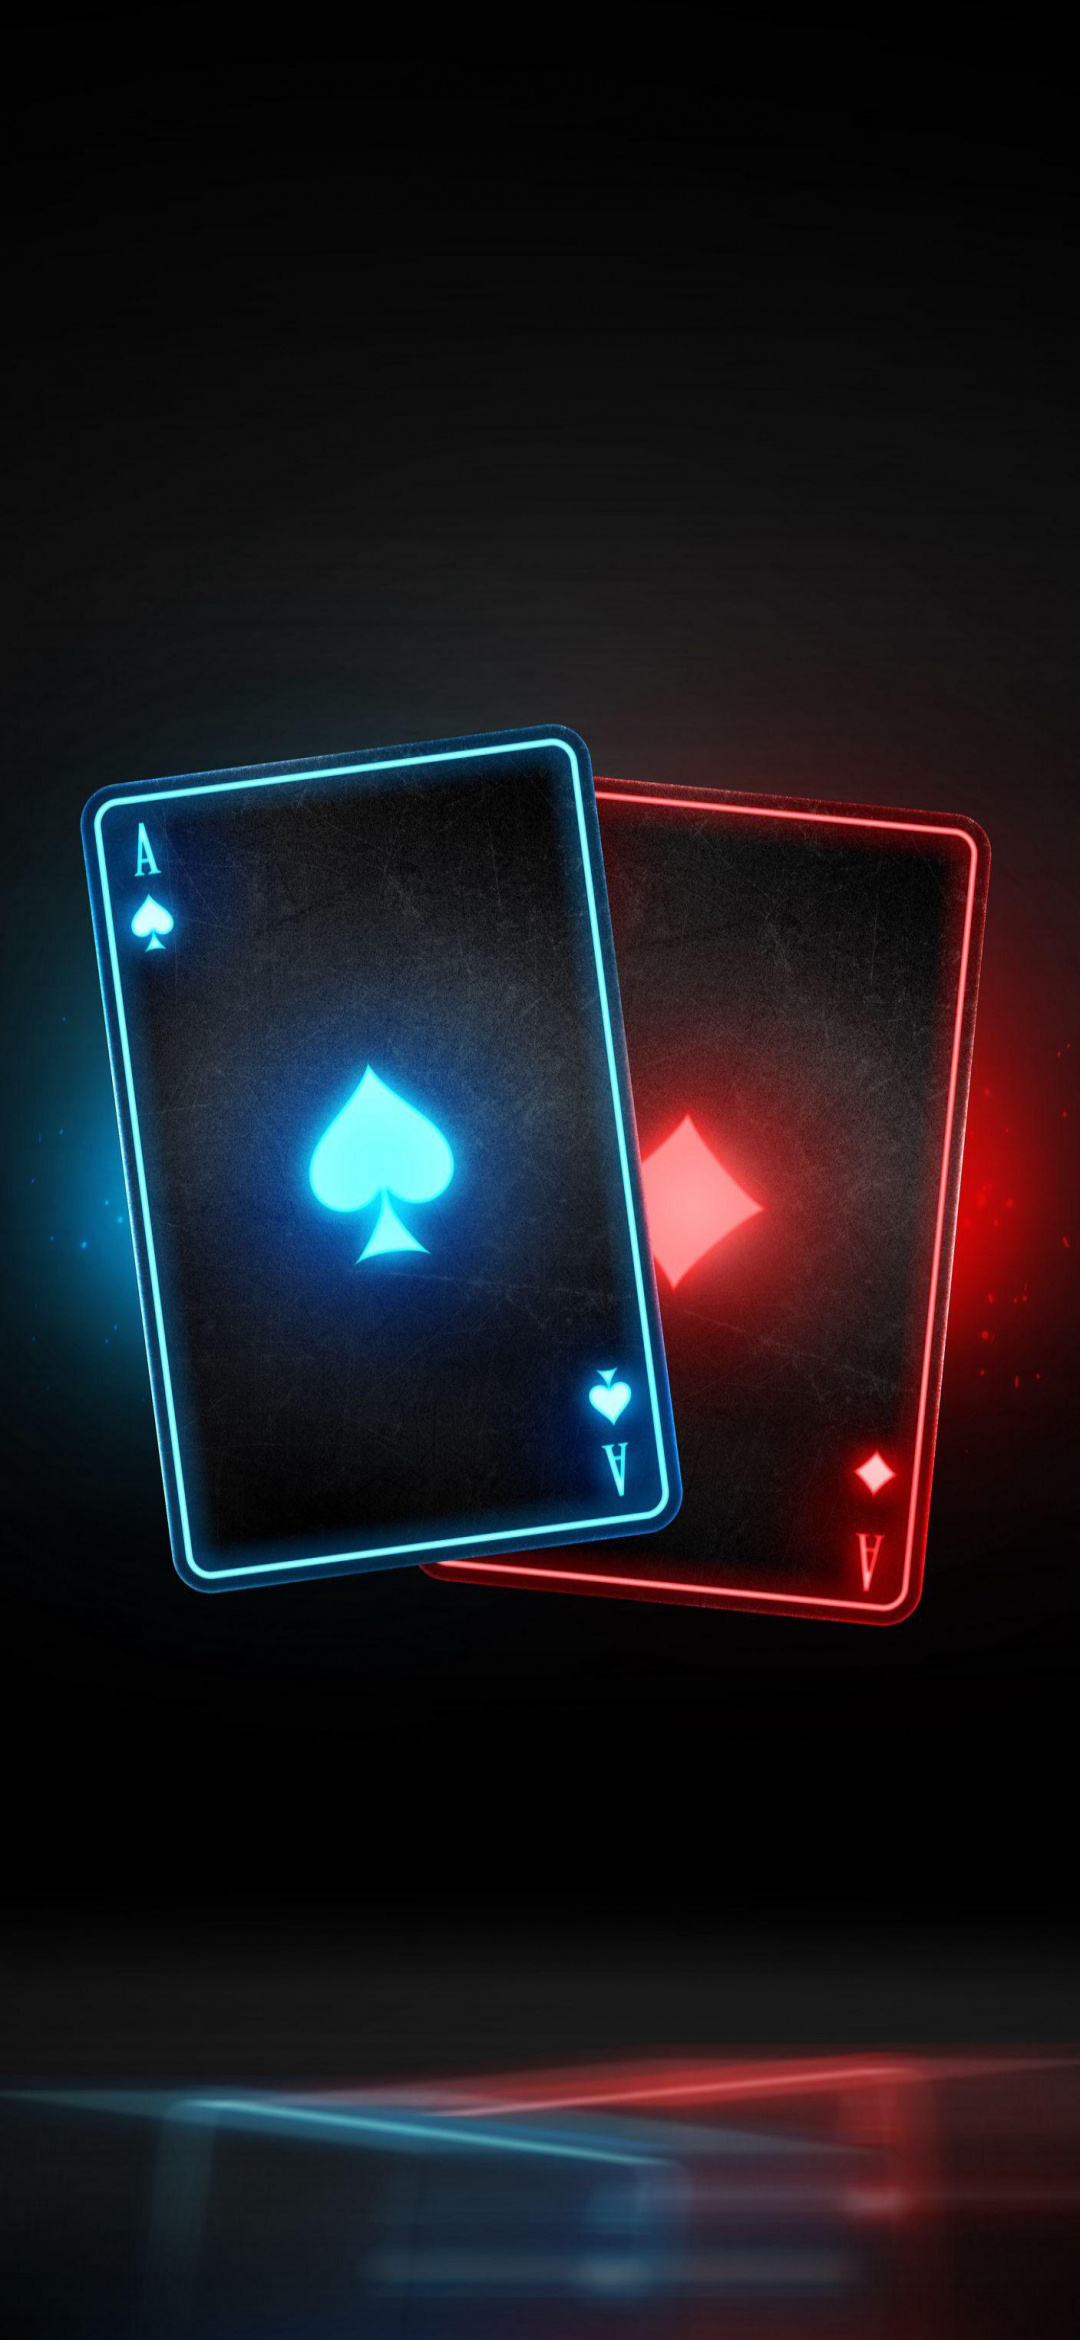 Wallpaper Neon Poker, Poker, Playing Card, Casino, Playing Card Game, Background Free Image